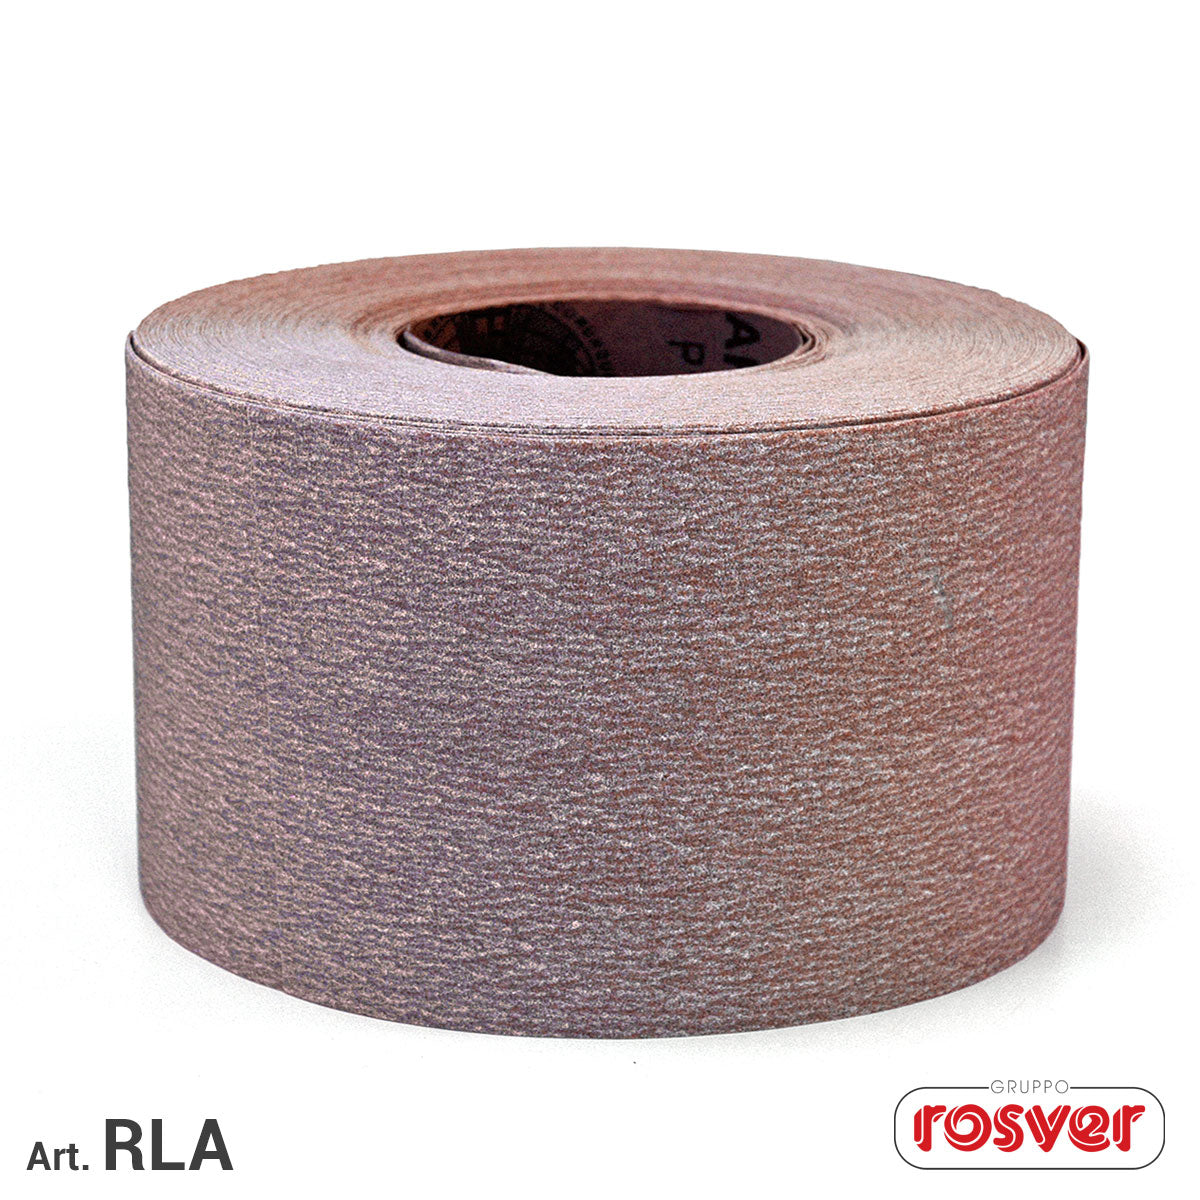 Stearate Paper Rolls RLA 115x50 Rosver - Conf.1pz